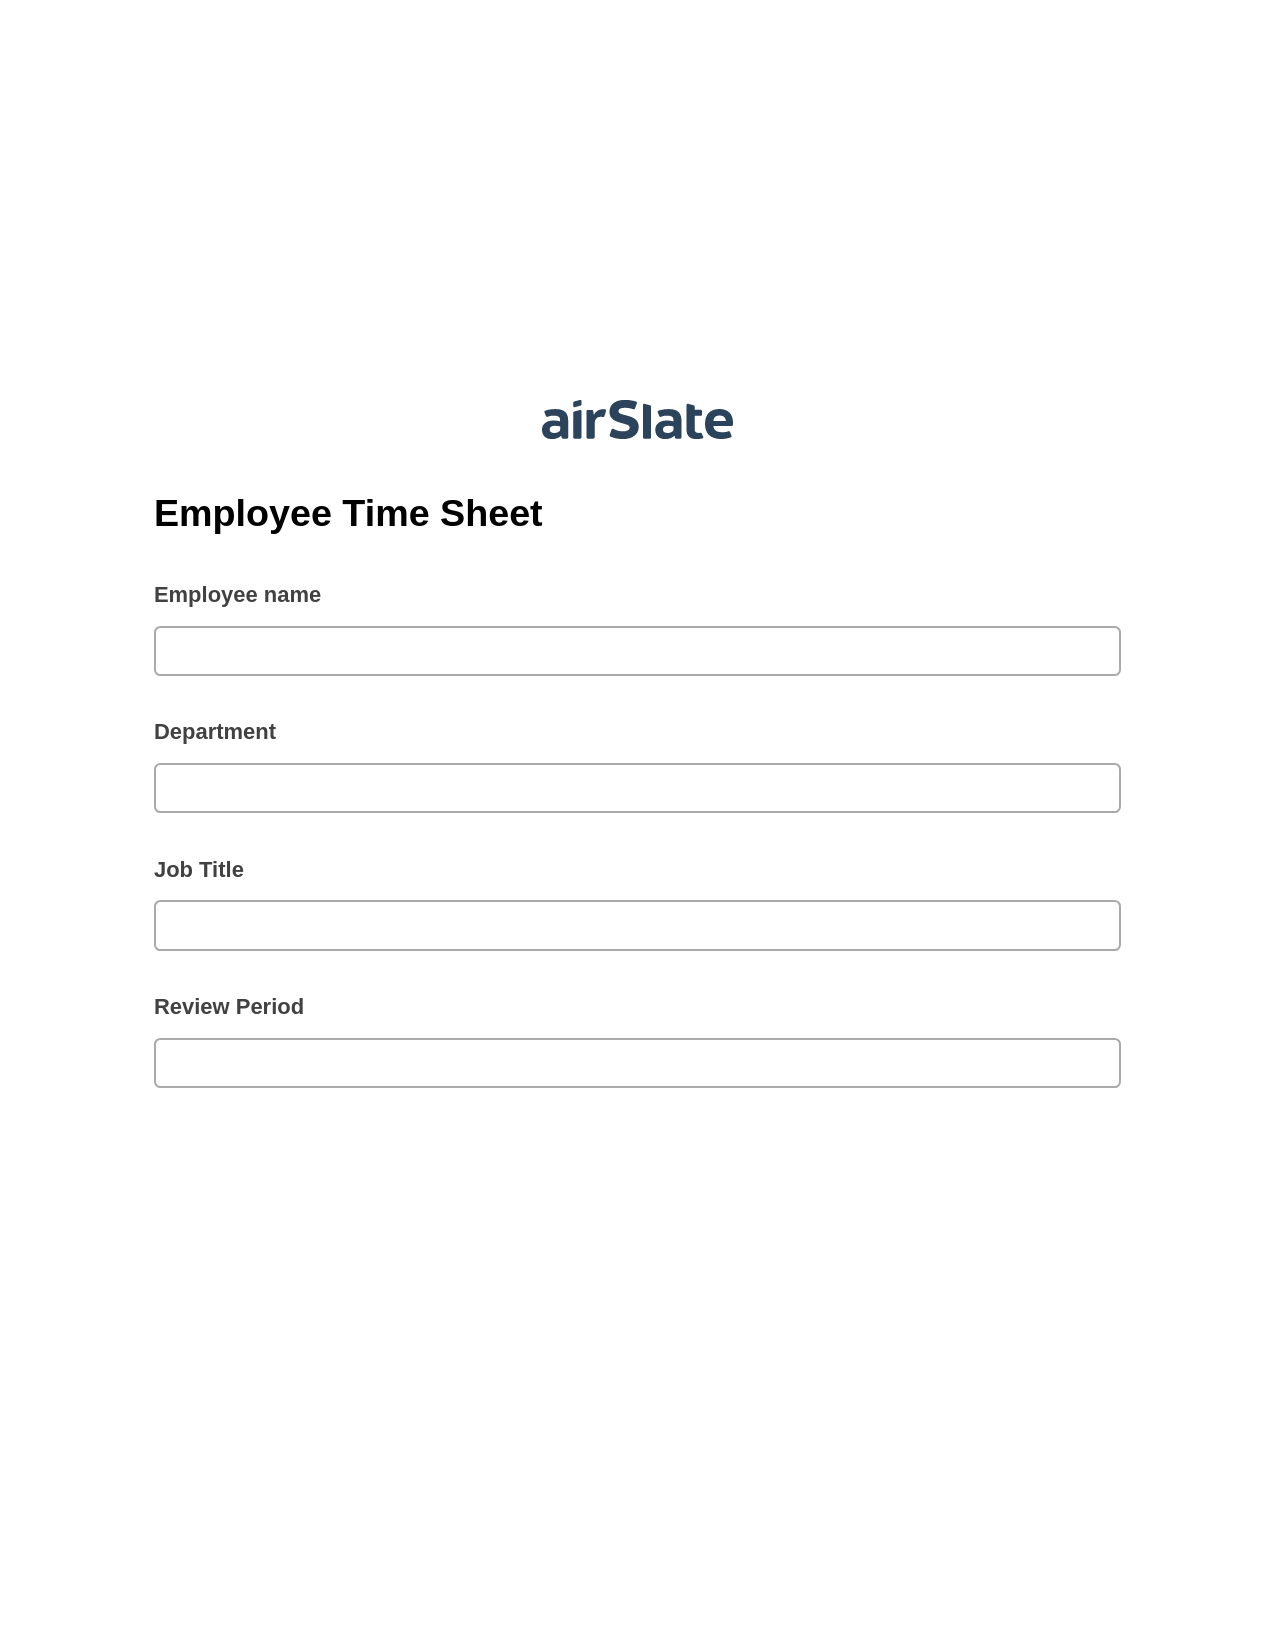 Employee Time Sheet Pre-fill from Salesforce Records Bot, Create Salesforce Records Bot, Export to Google Sheet Bot